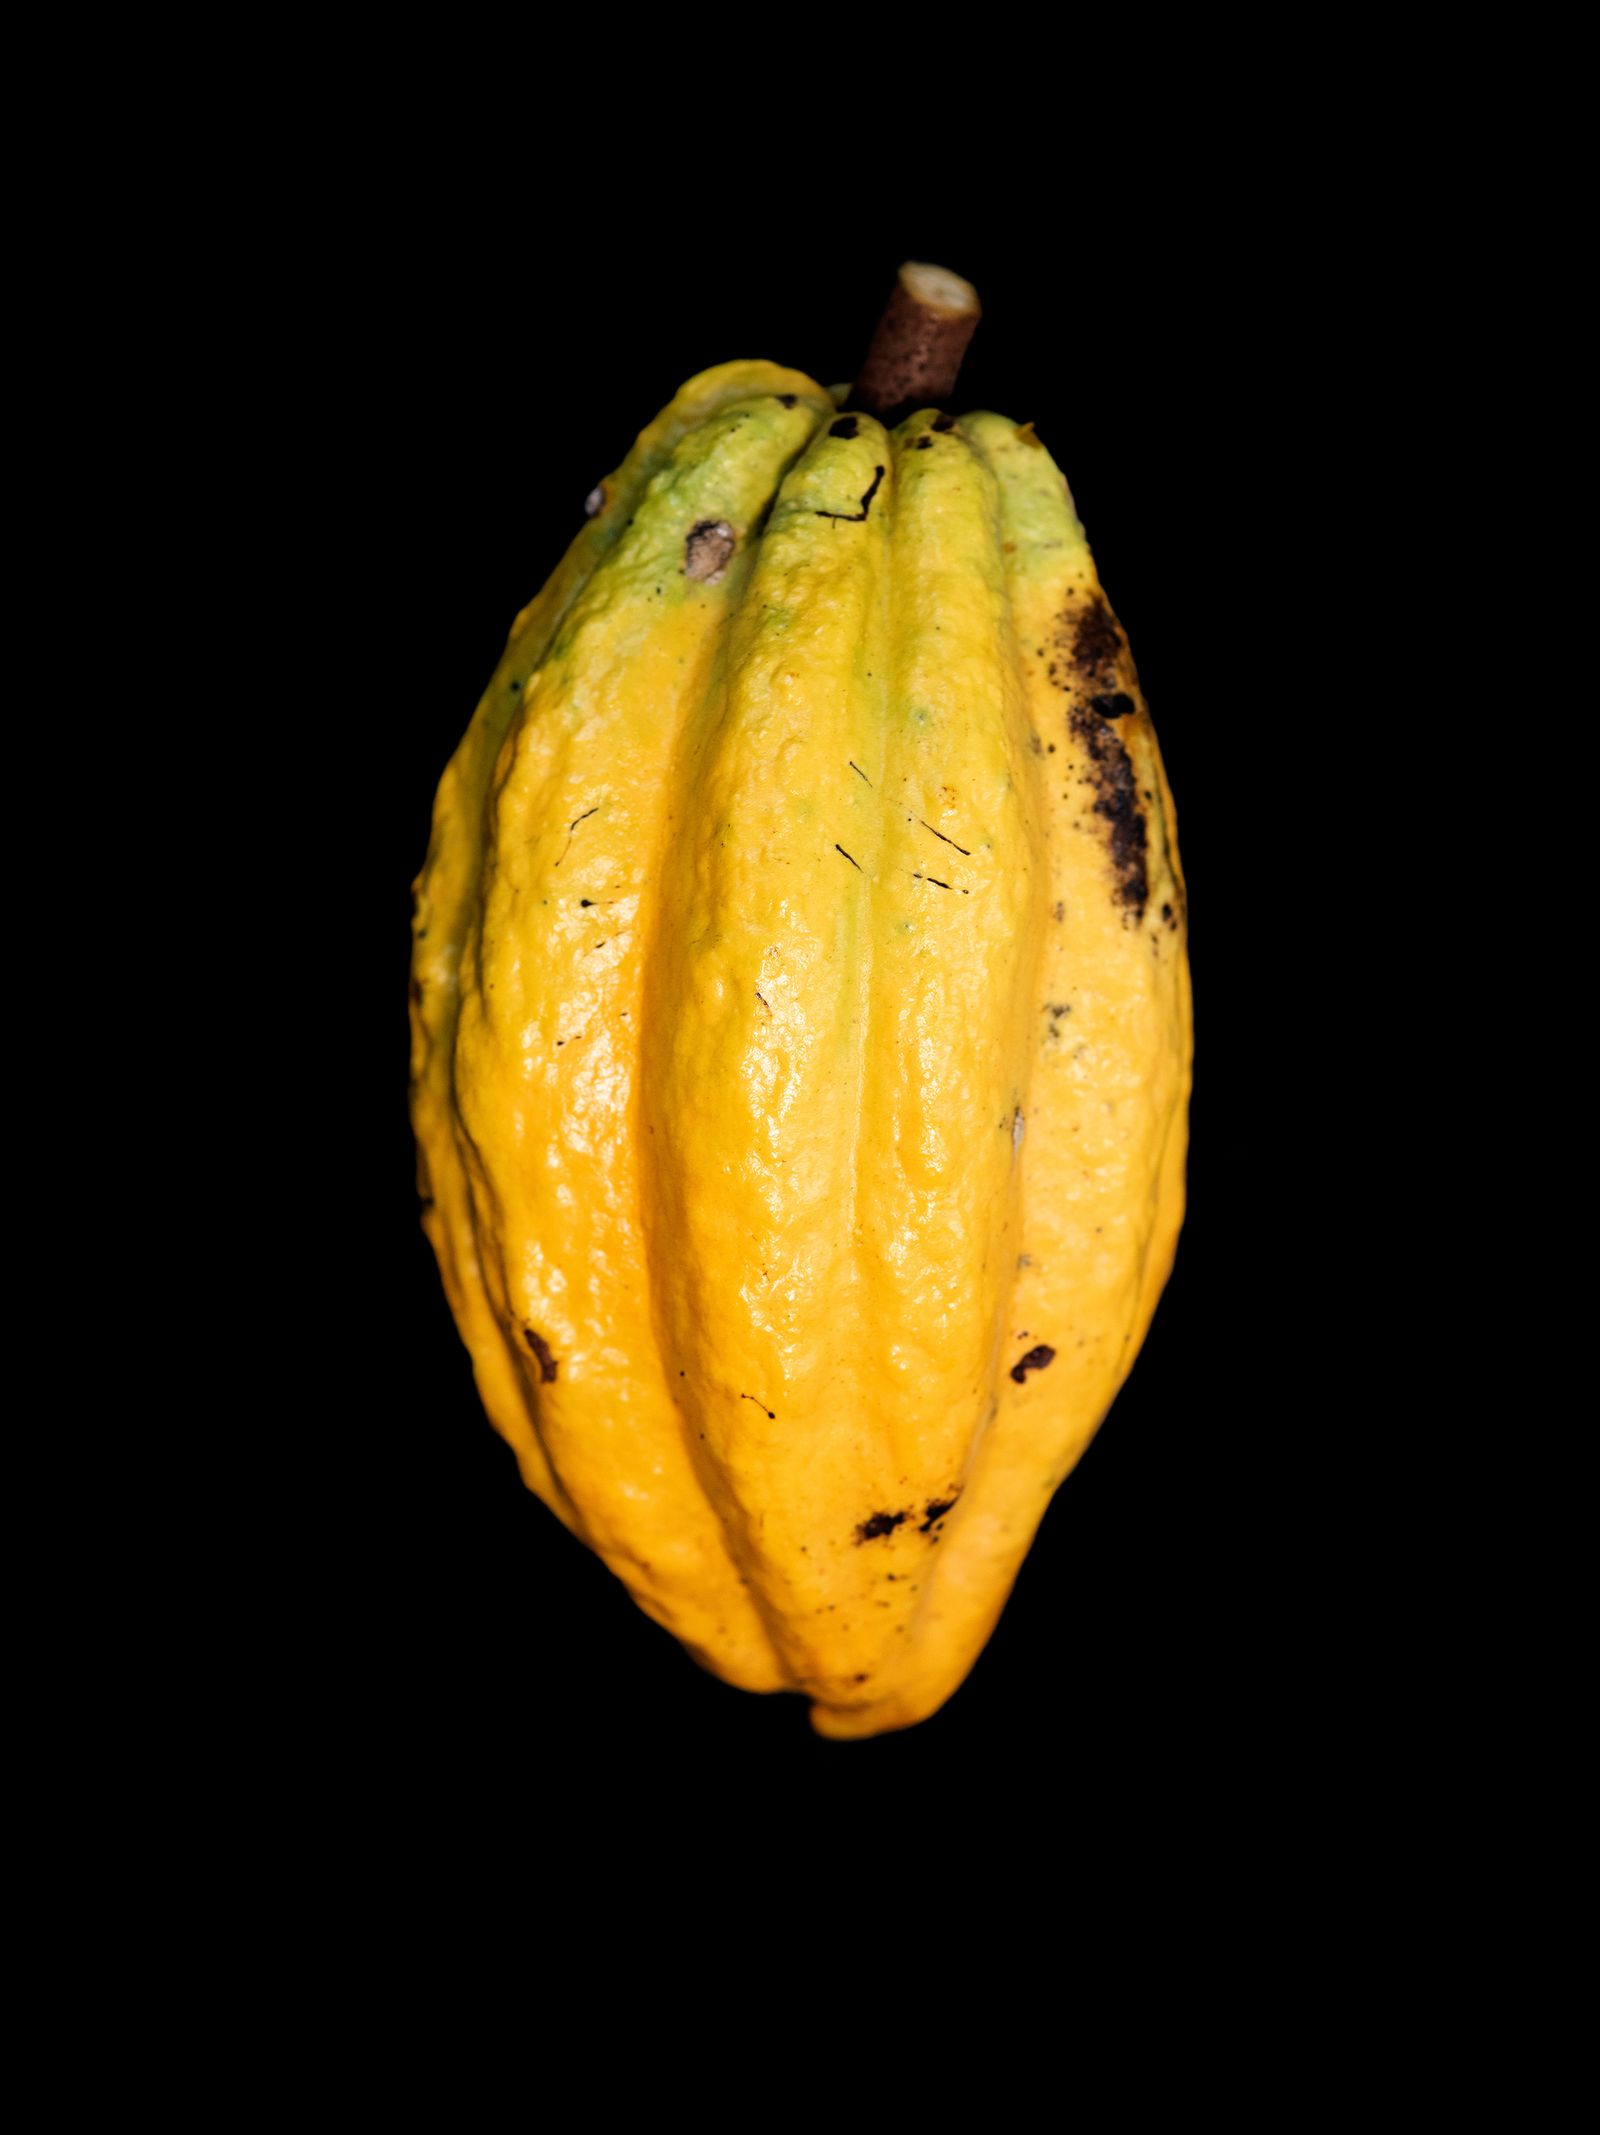 © Tommaso Rada - A Still life images of the Cacau (Theobroma cacao) fruit. Acará Brazil